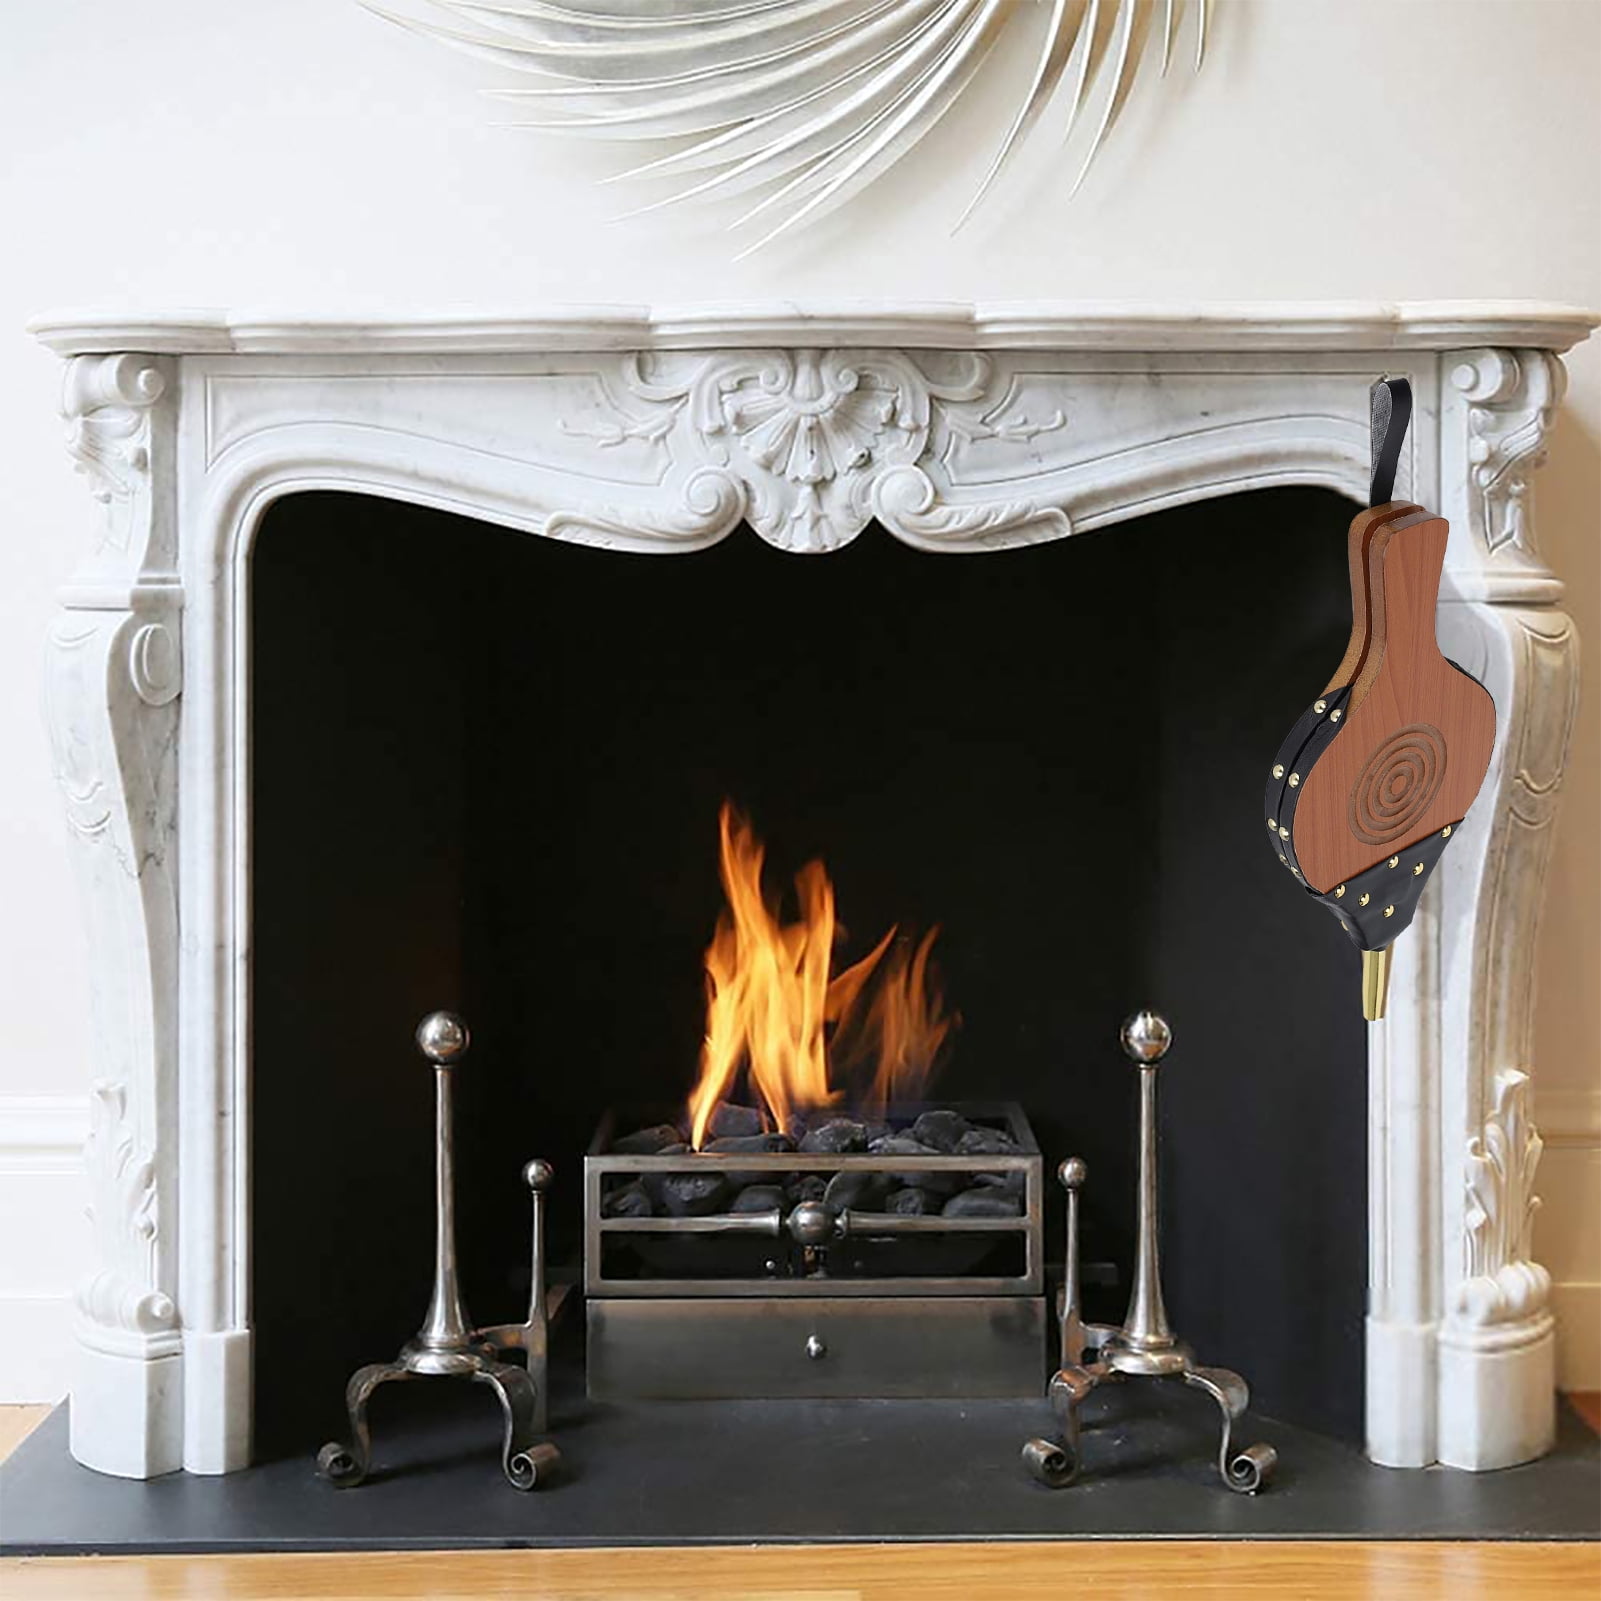 Details about   Wood Fireside Bellows Hand Bellows Pump BBQ Chimney Grill Fire Tools Blower 